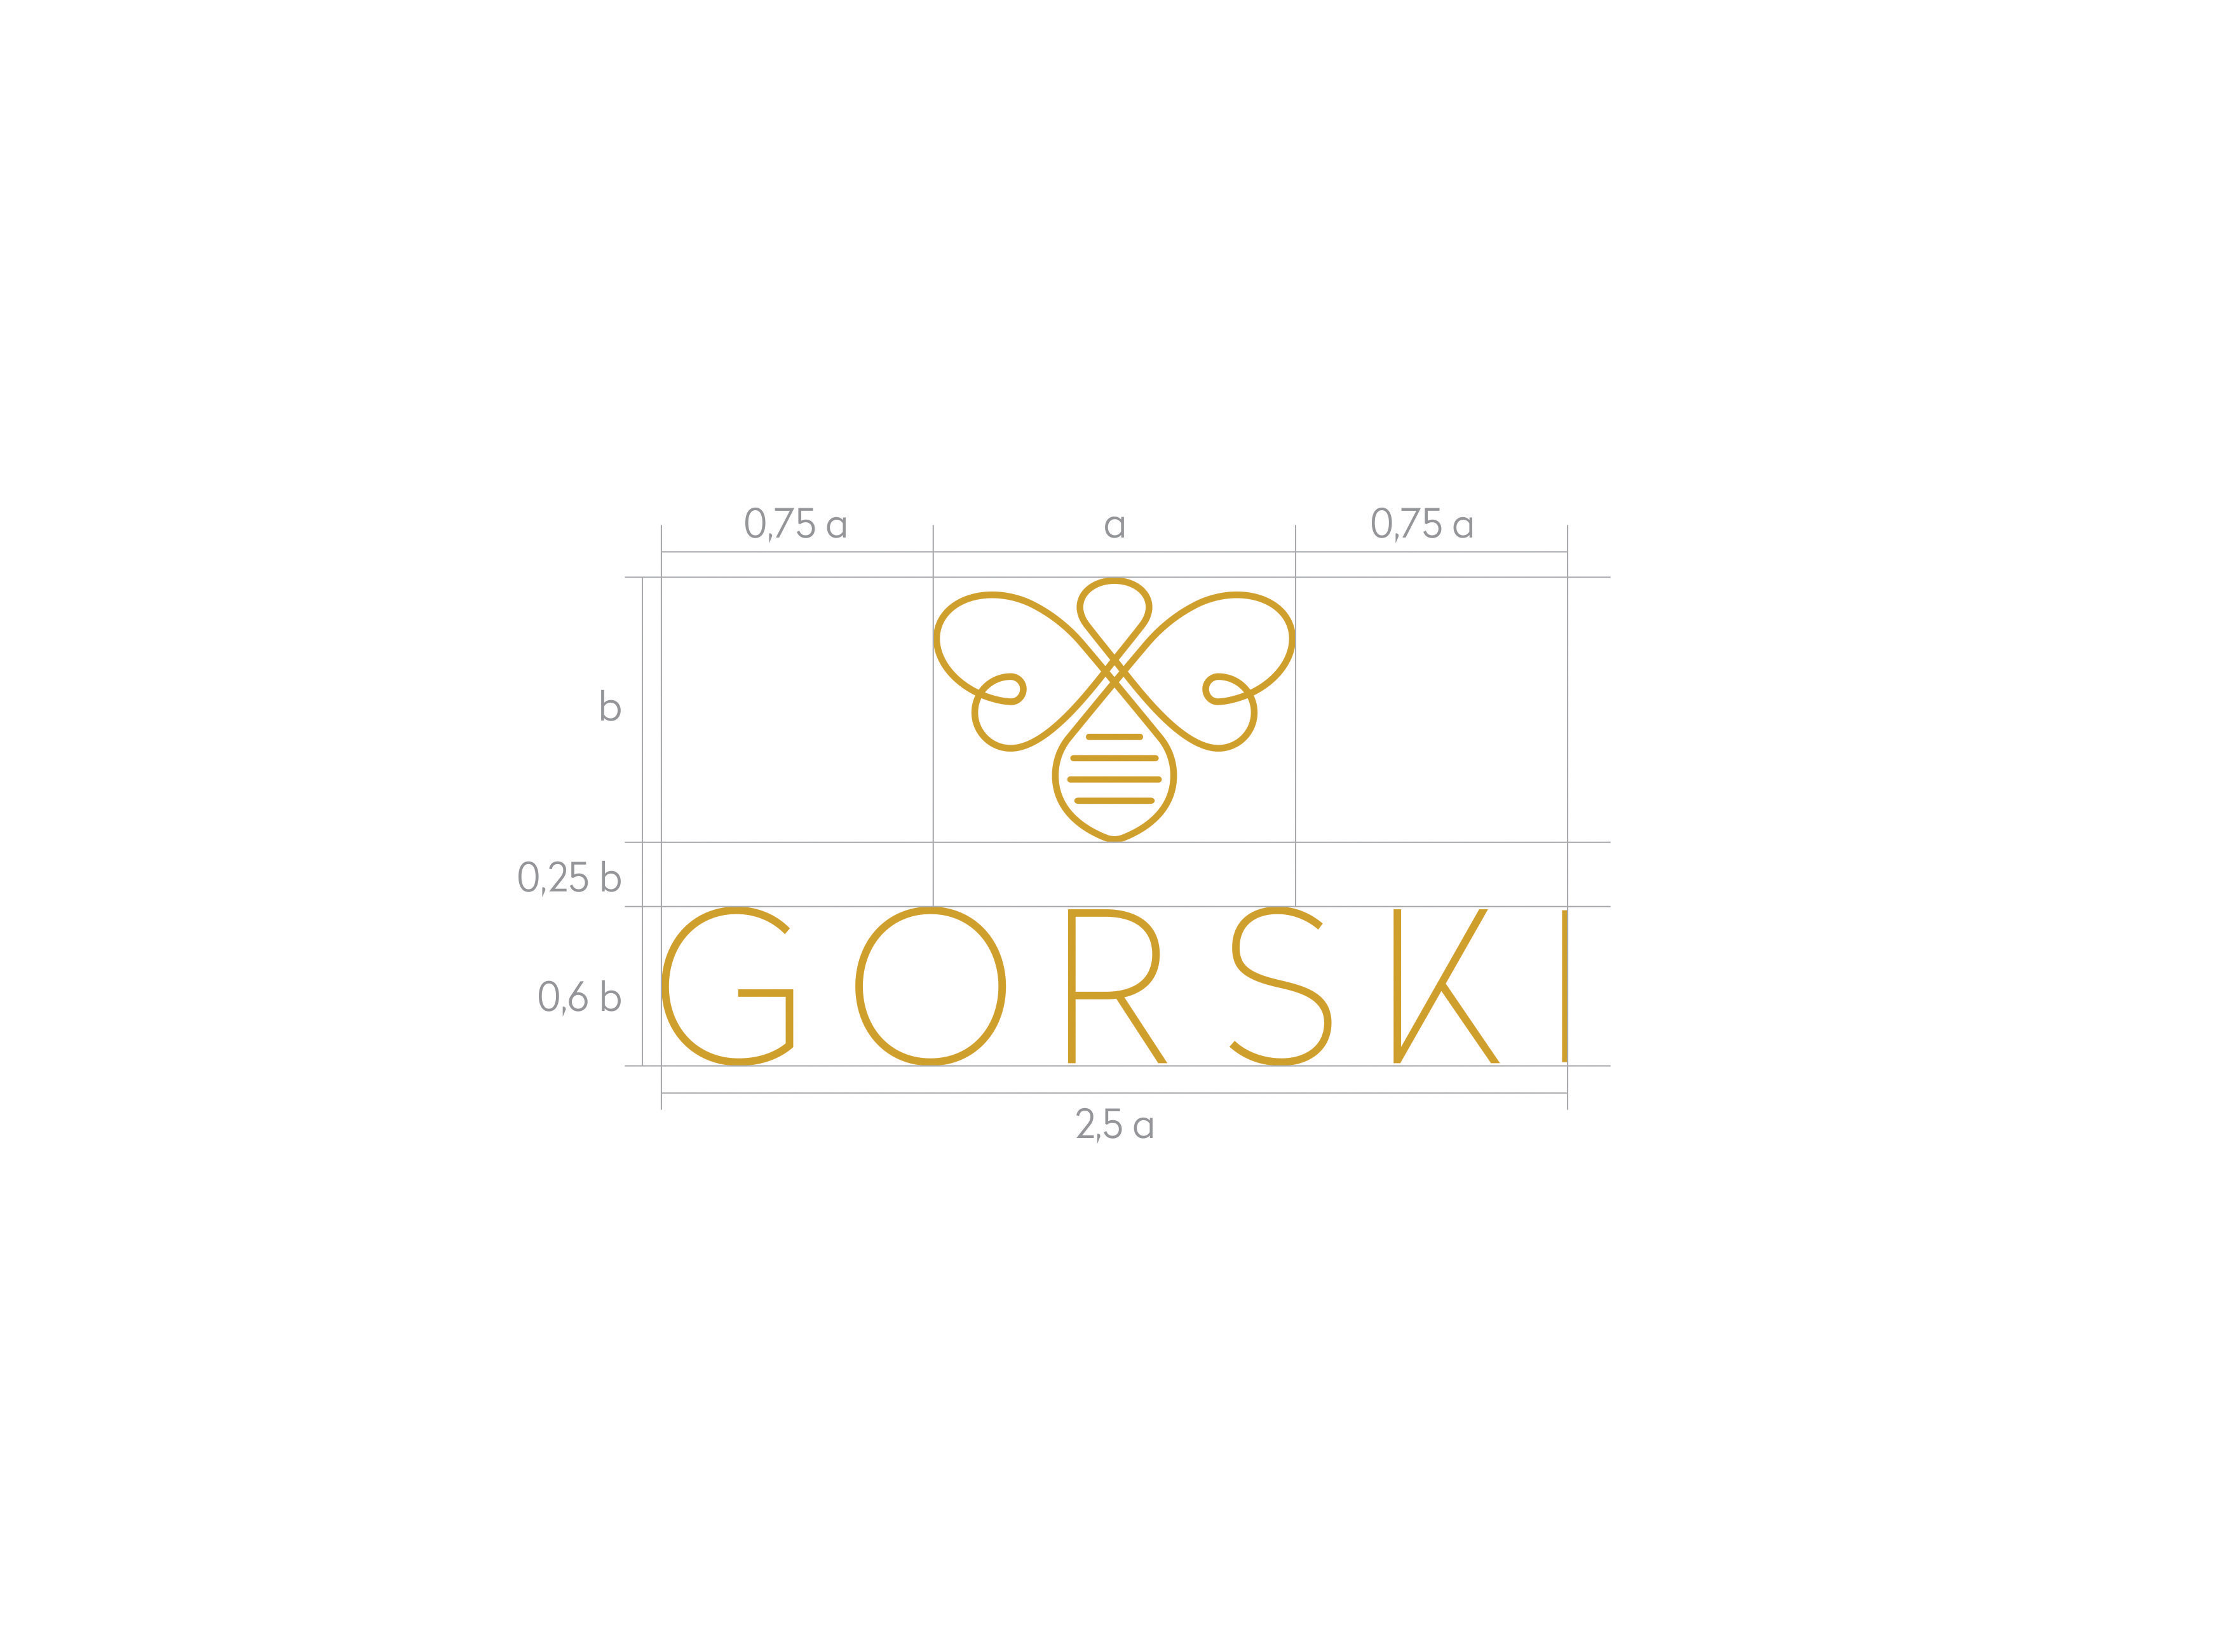   GORSKI蜂蜜标志设计